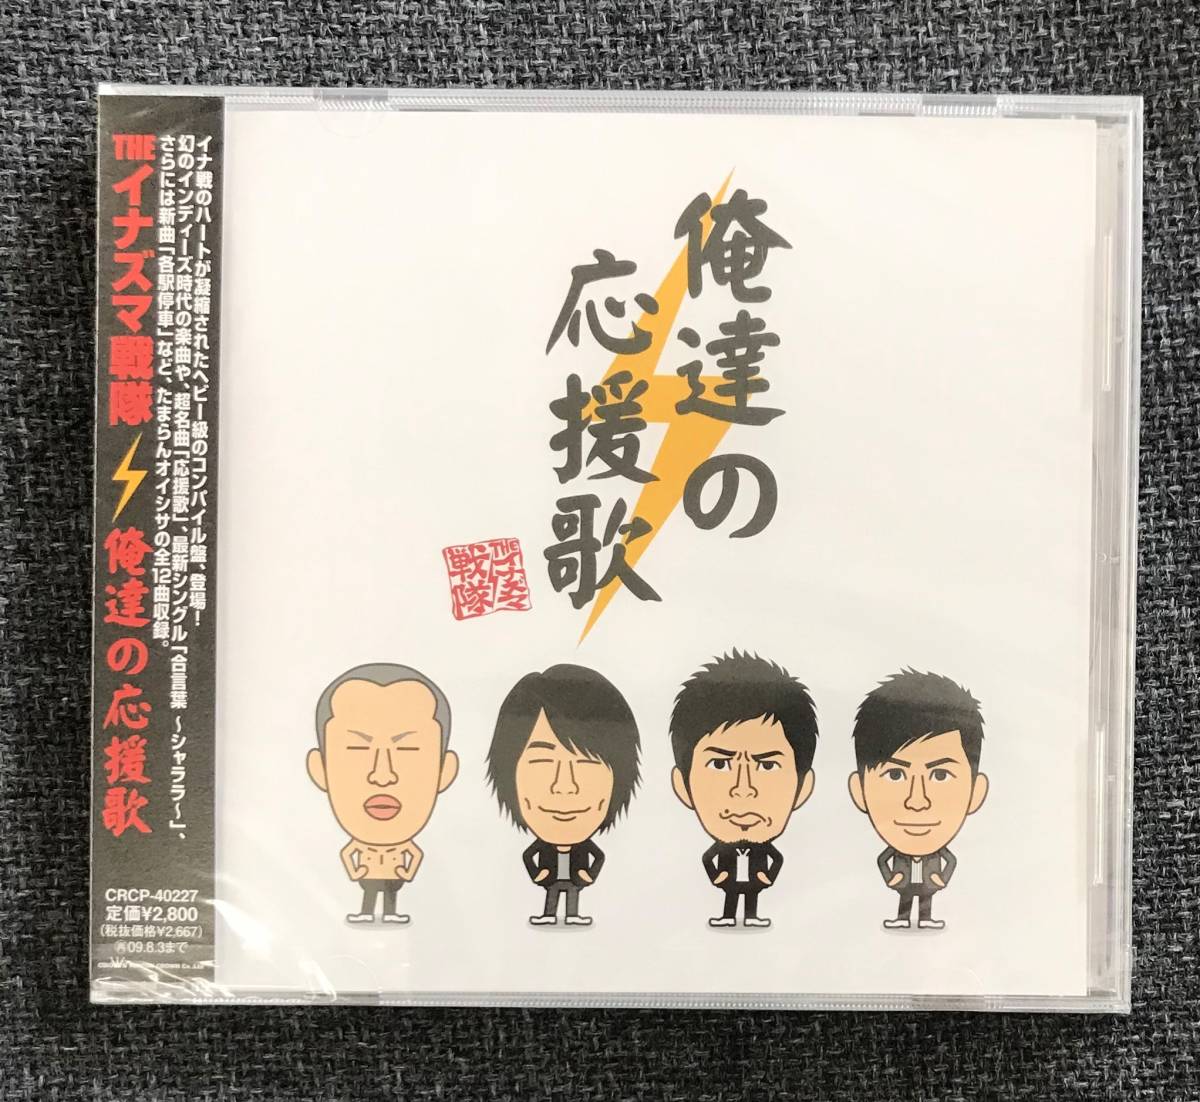 新品未開封cd ｔｈｅイナズマ戦隊 俺達の応援歌 Crcp 正規